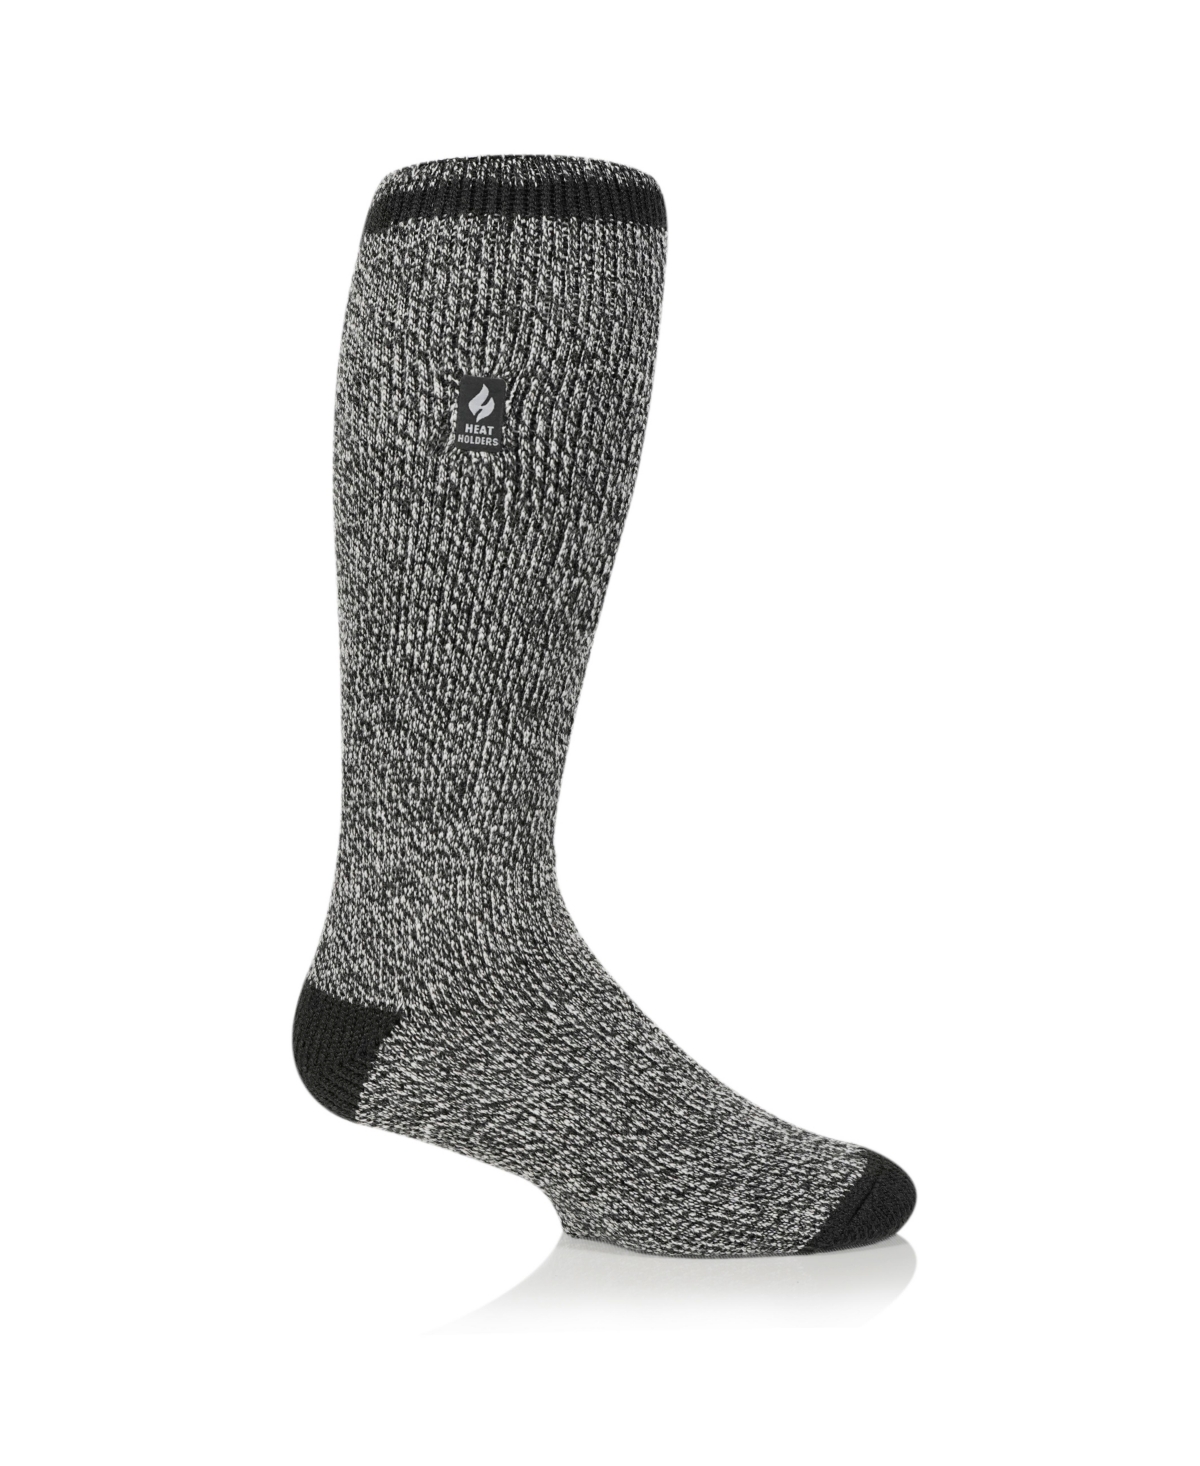 Men's Gabriel Twist Long Cotton Sock - Charcoal, Light Gray